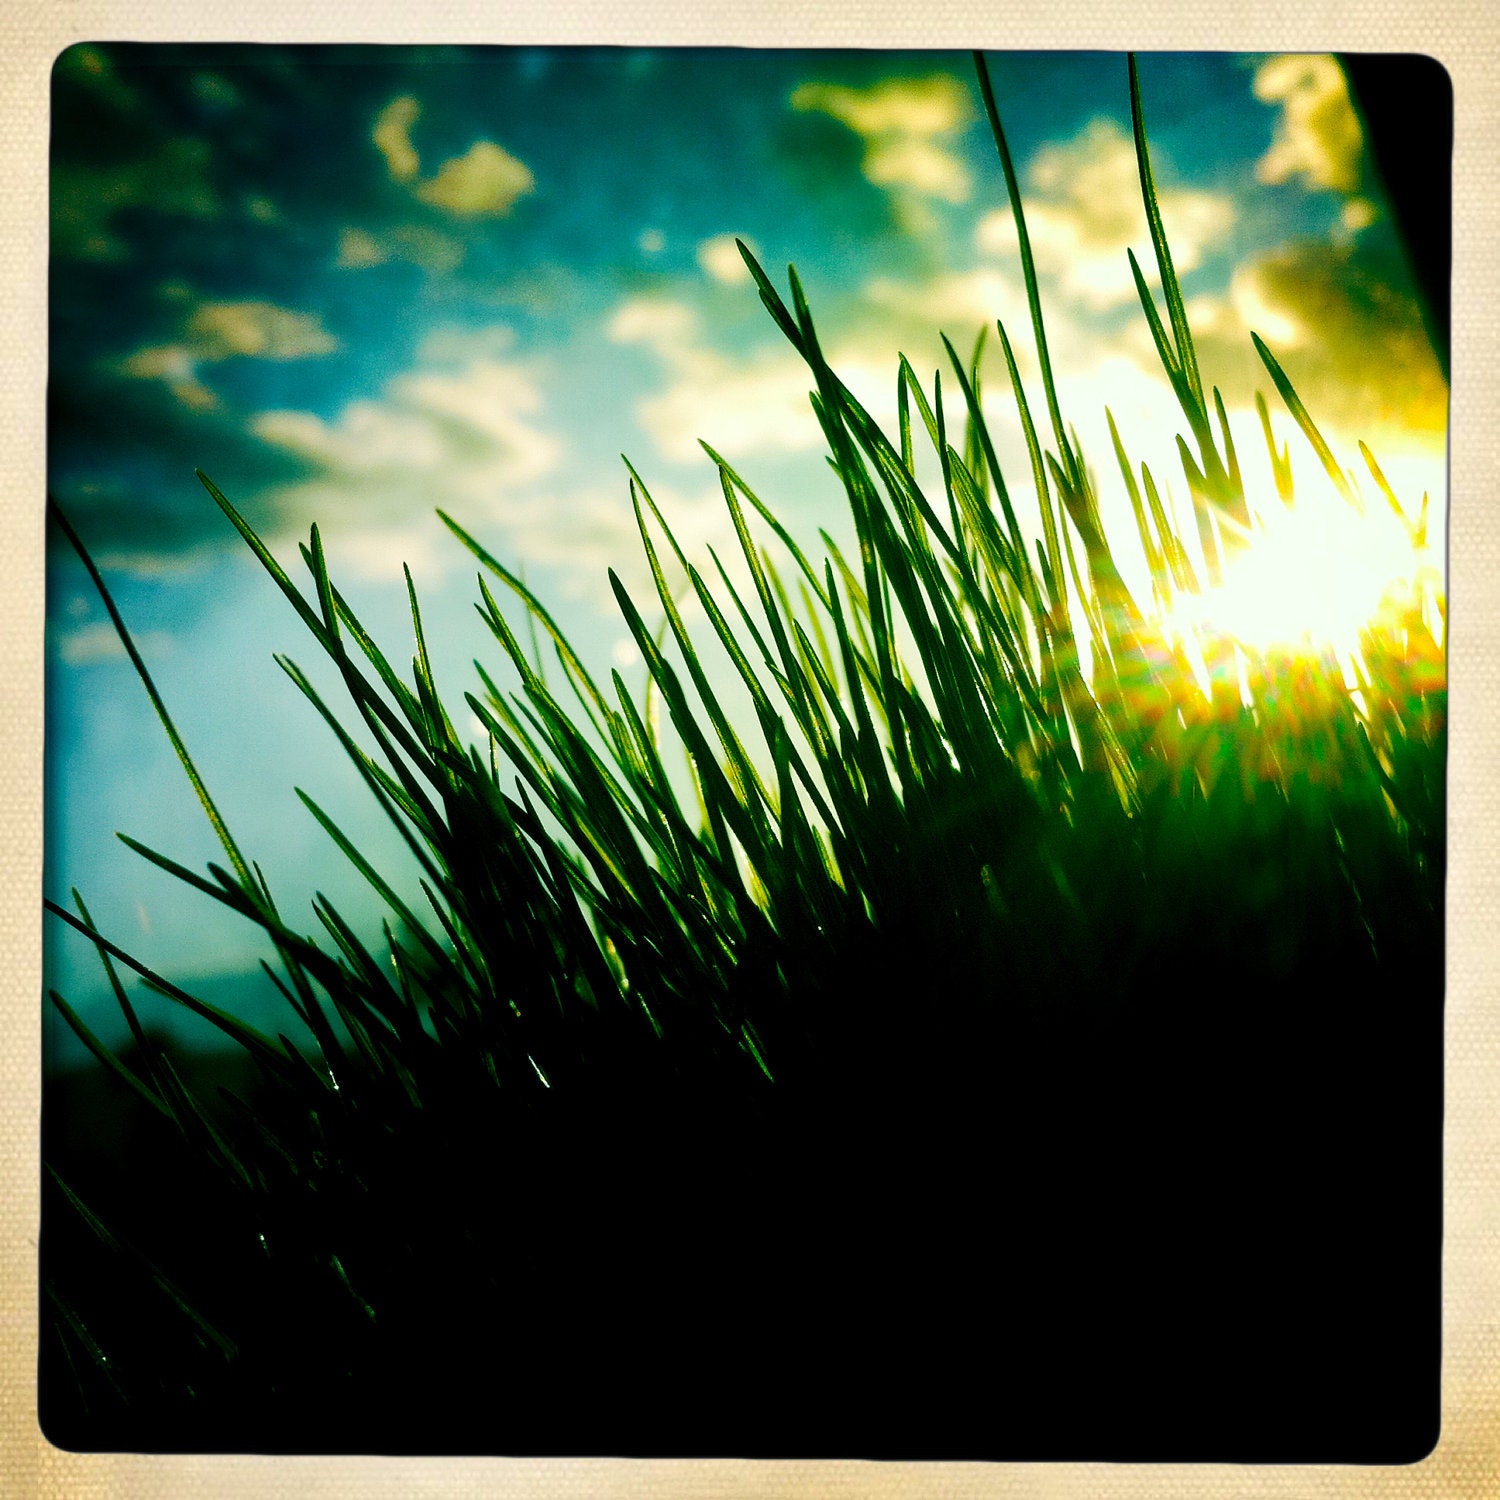 Sun Through Grass - Fine Art Photograph - 8x8, Yellow, Green, Blue, Clouds, Rustic Childrens Decor, Sunshine, Disney, Morning, Sunrise - jackslomovits